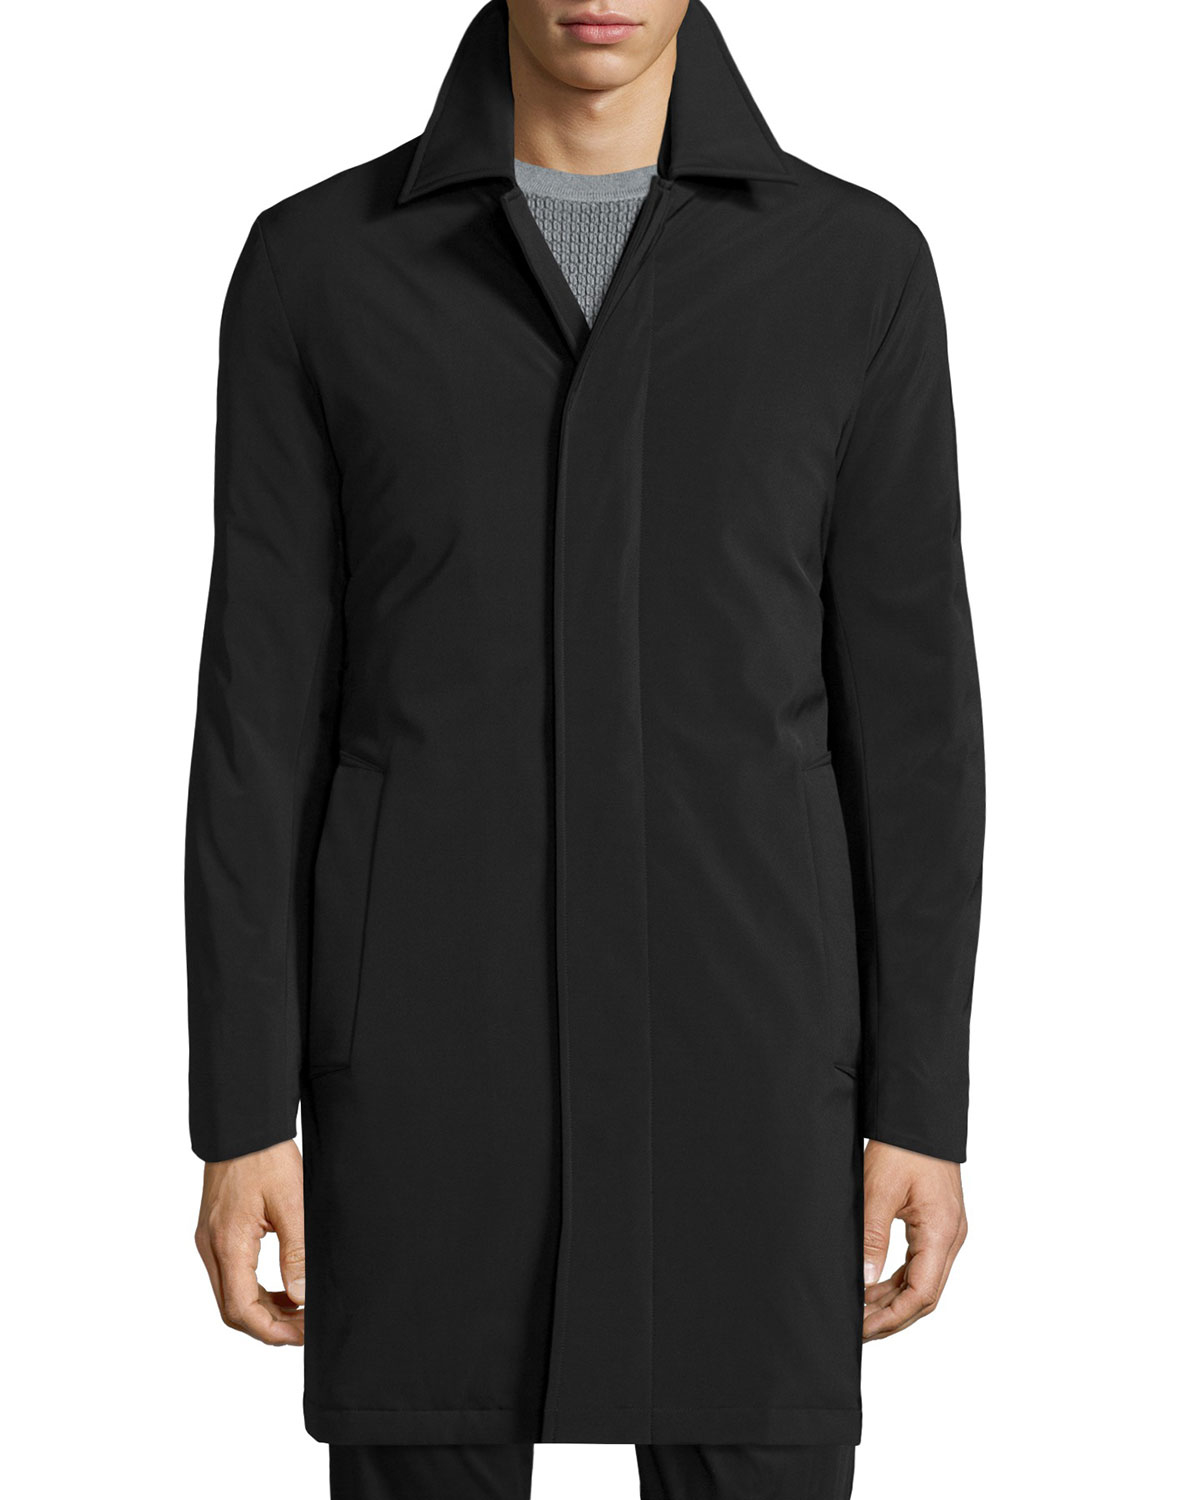 Theory Synthetic Skodi Padded Zip Raincoat in Black for Men - Lyst